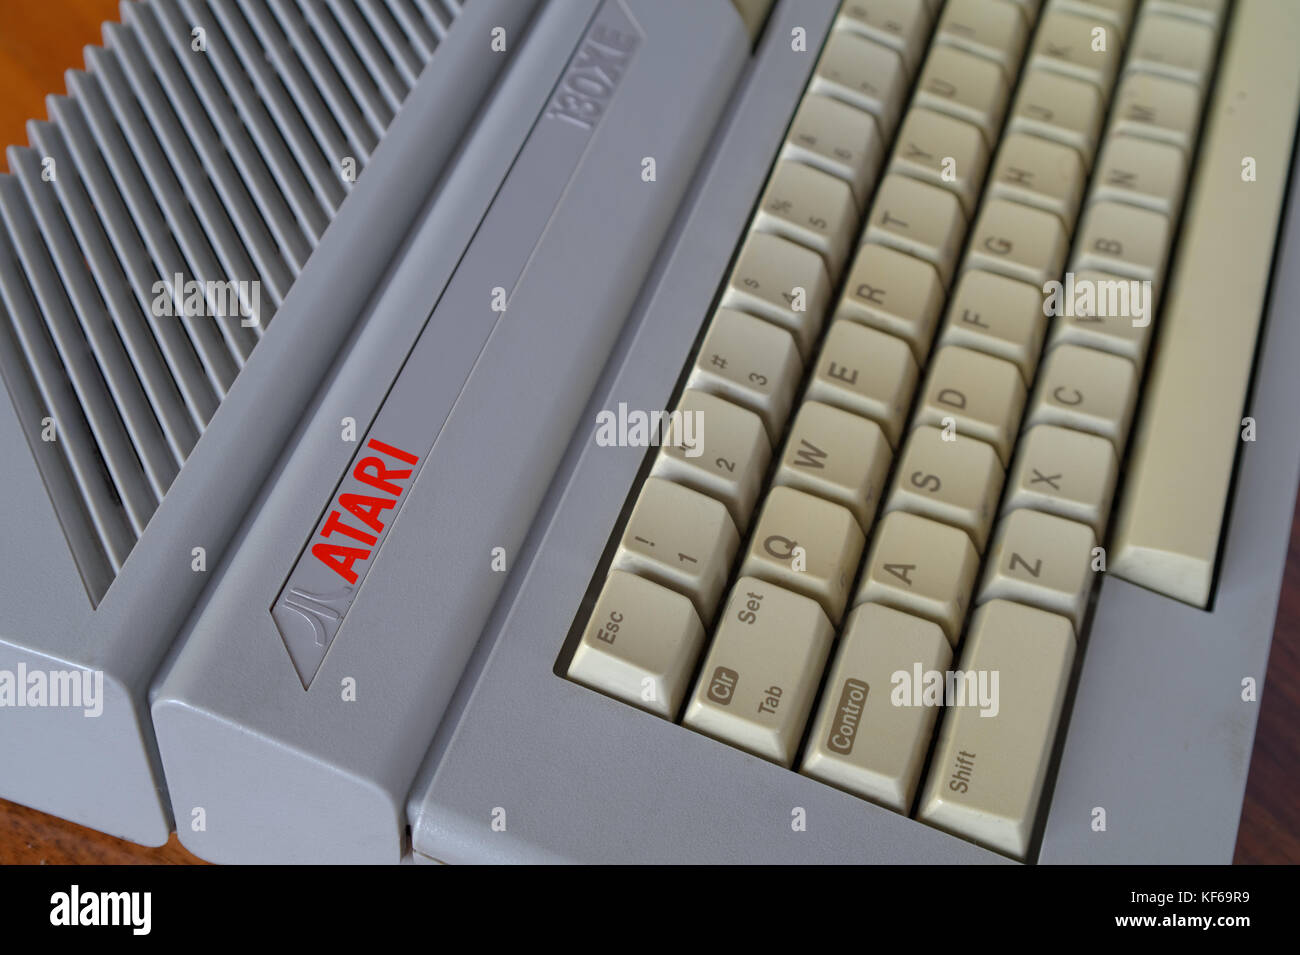 Atari 130 XE computer Stock Photo